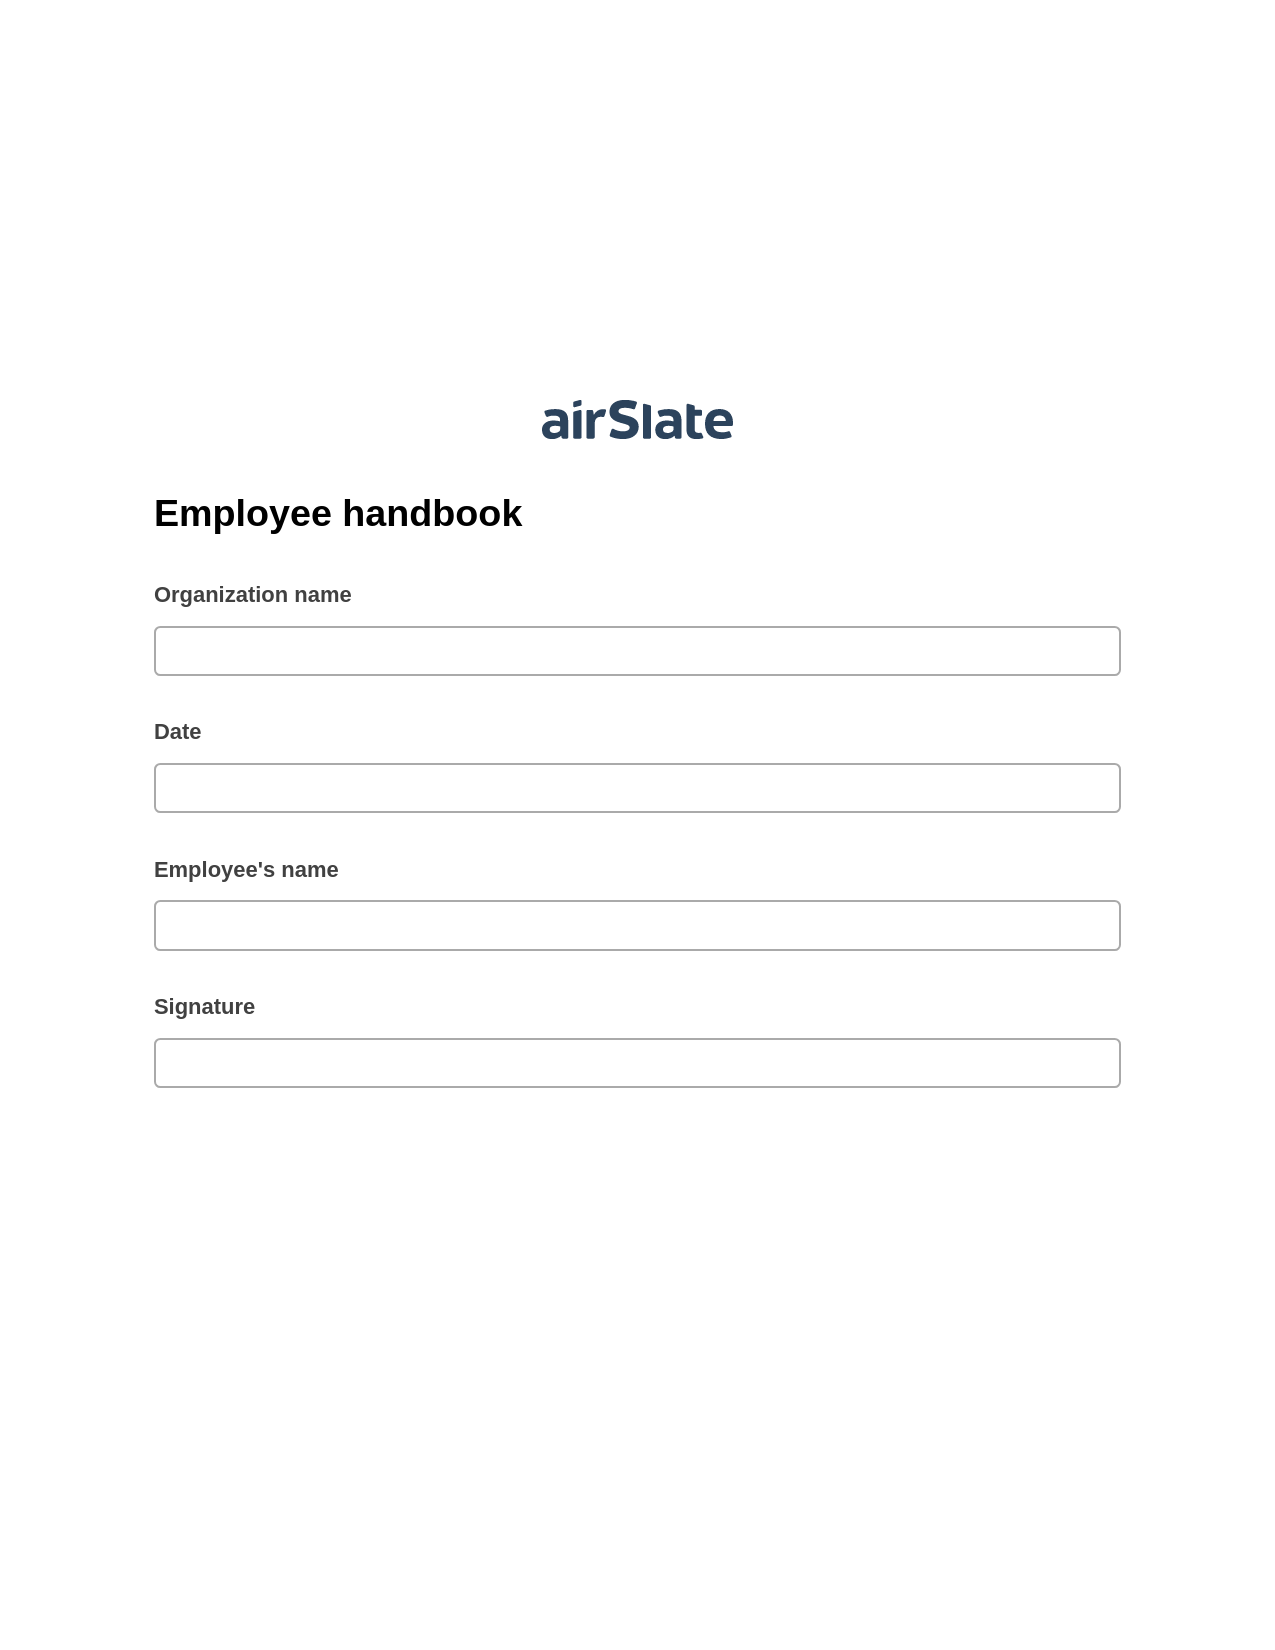 Multirole Employee handbook Pre-fill from Salesforce Record Bot, Set Signature Type Bot, OneDrive Bot